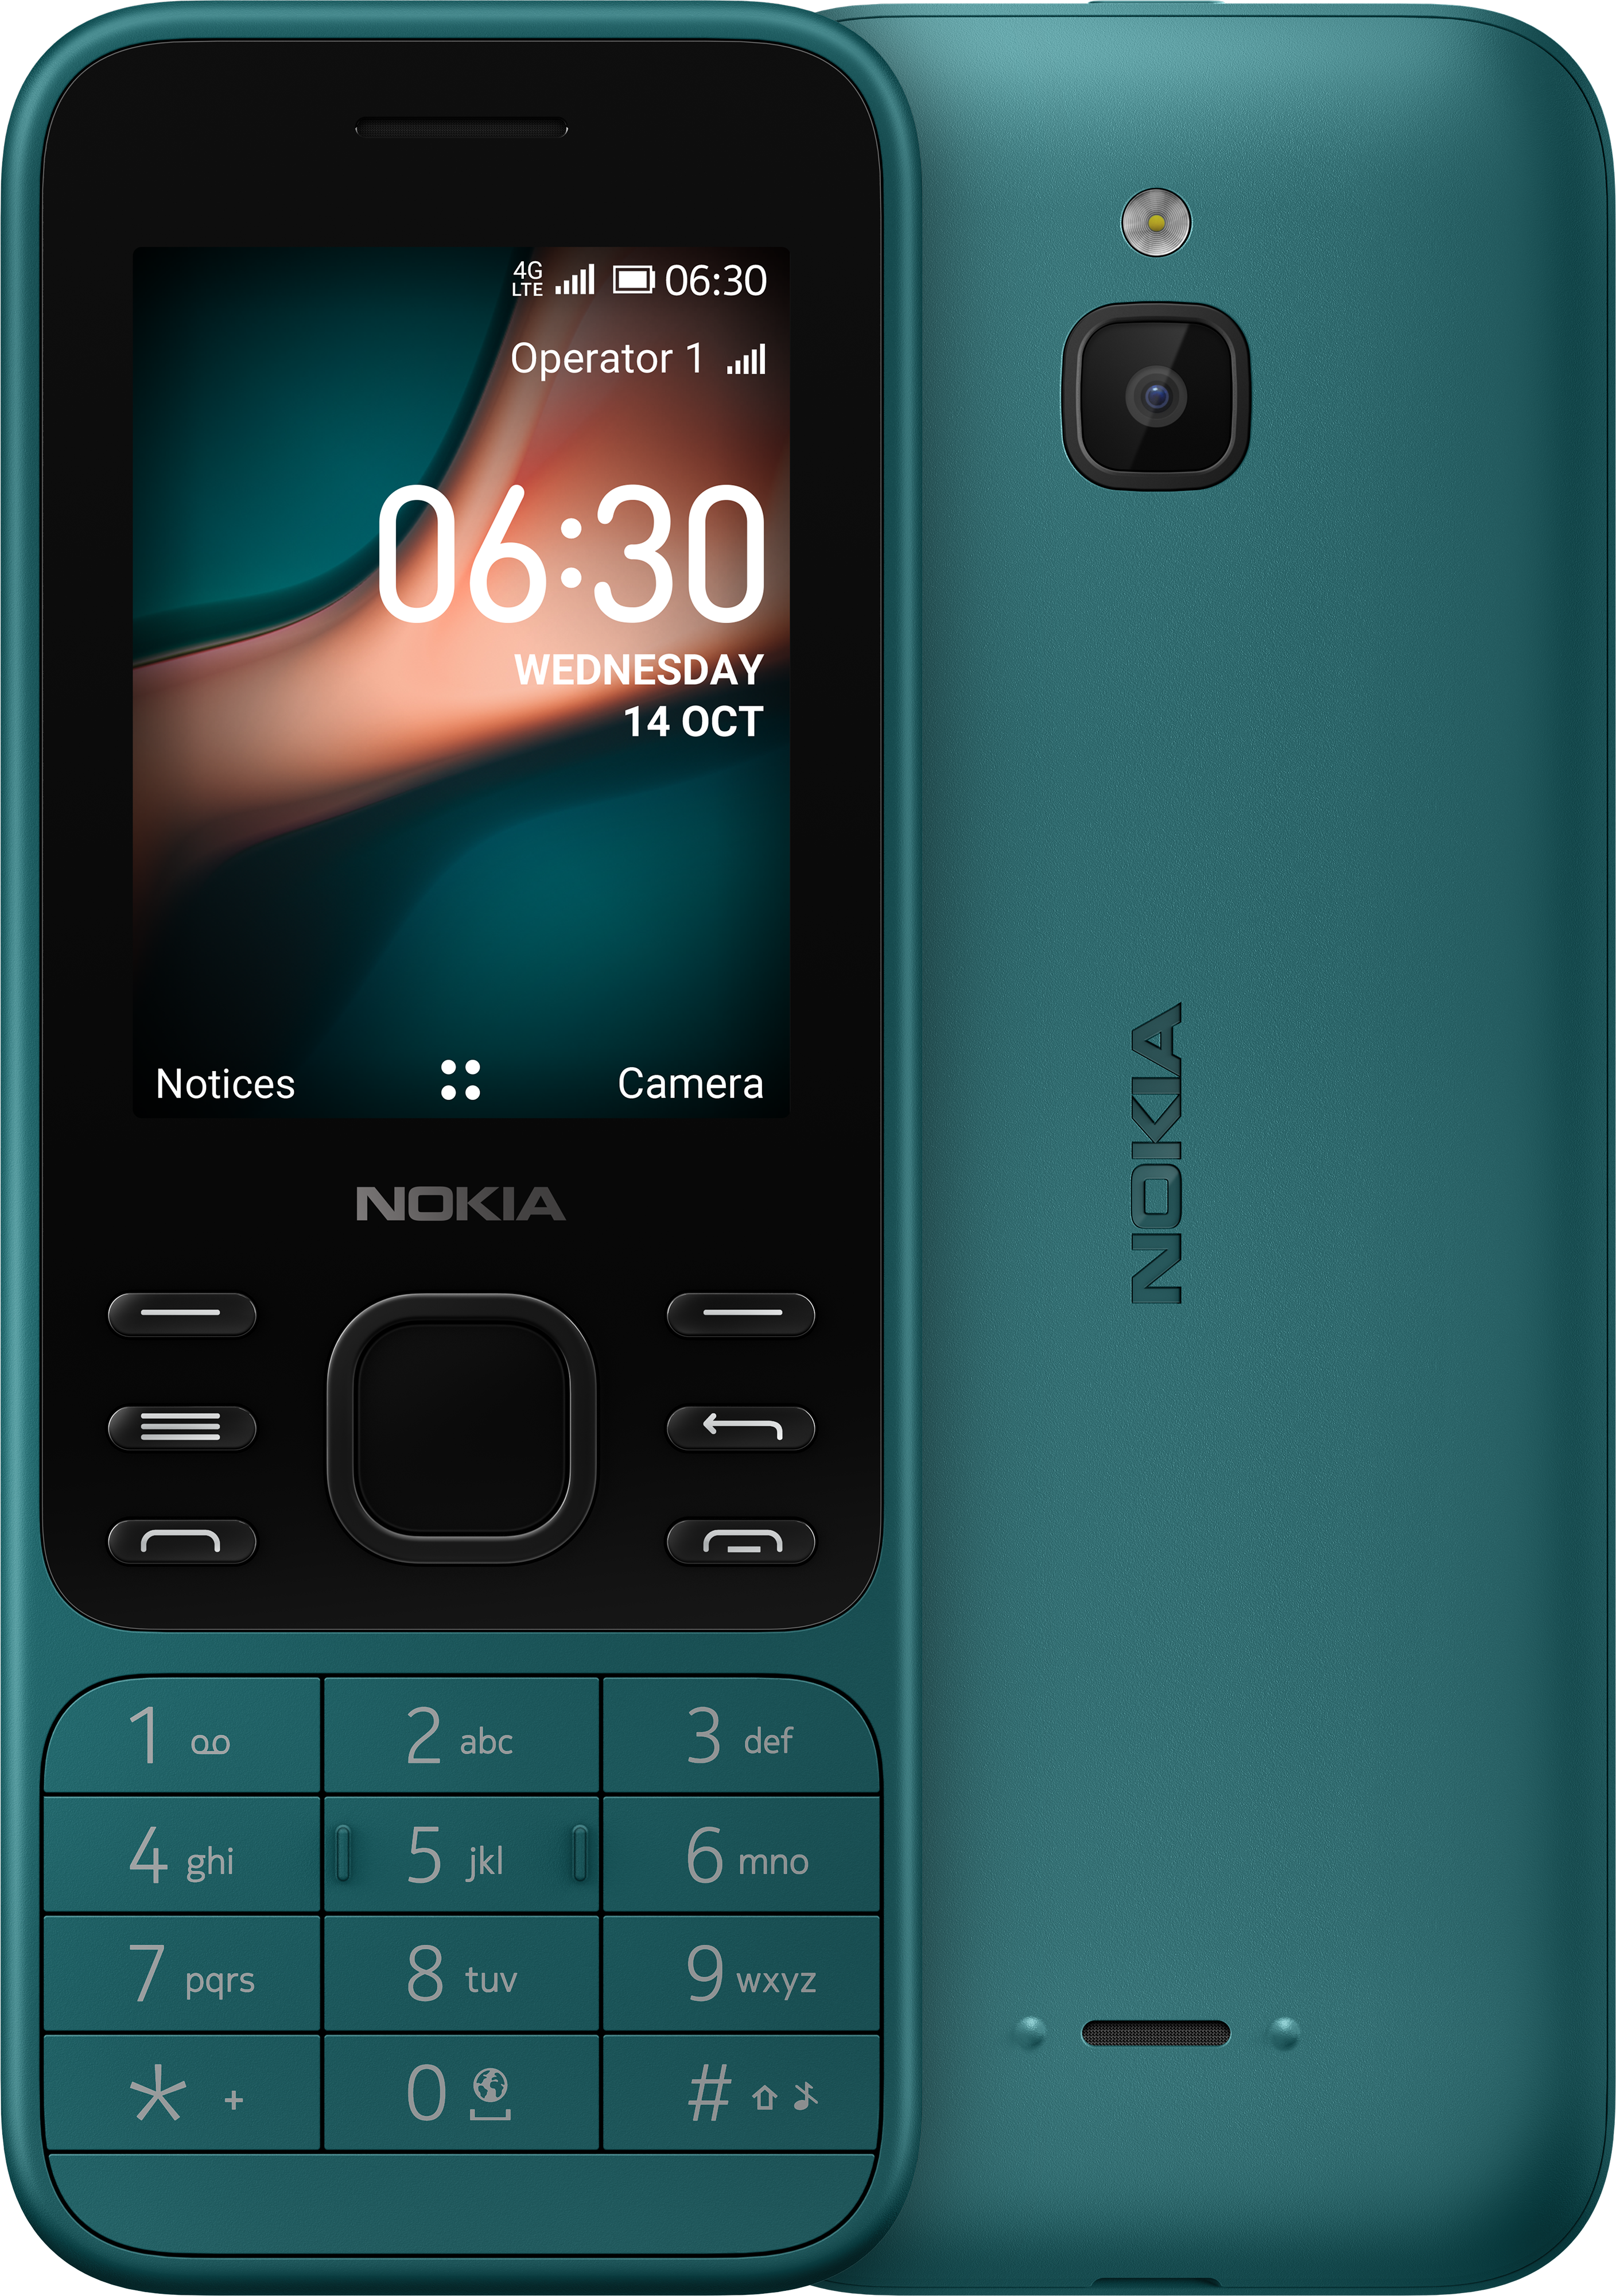 Nokia 6300 4G 2020 Cyan Green 2.4 (FACTORY UNLOCKED) QuadCore Phone CN  FREESHIP